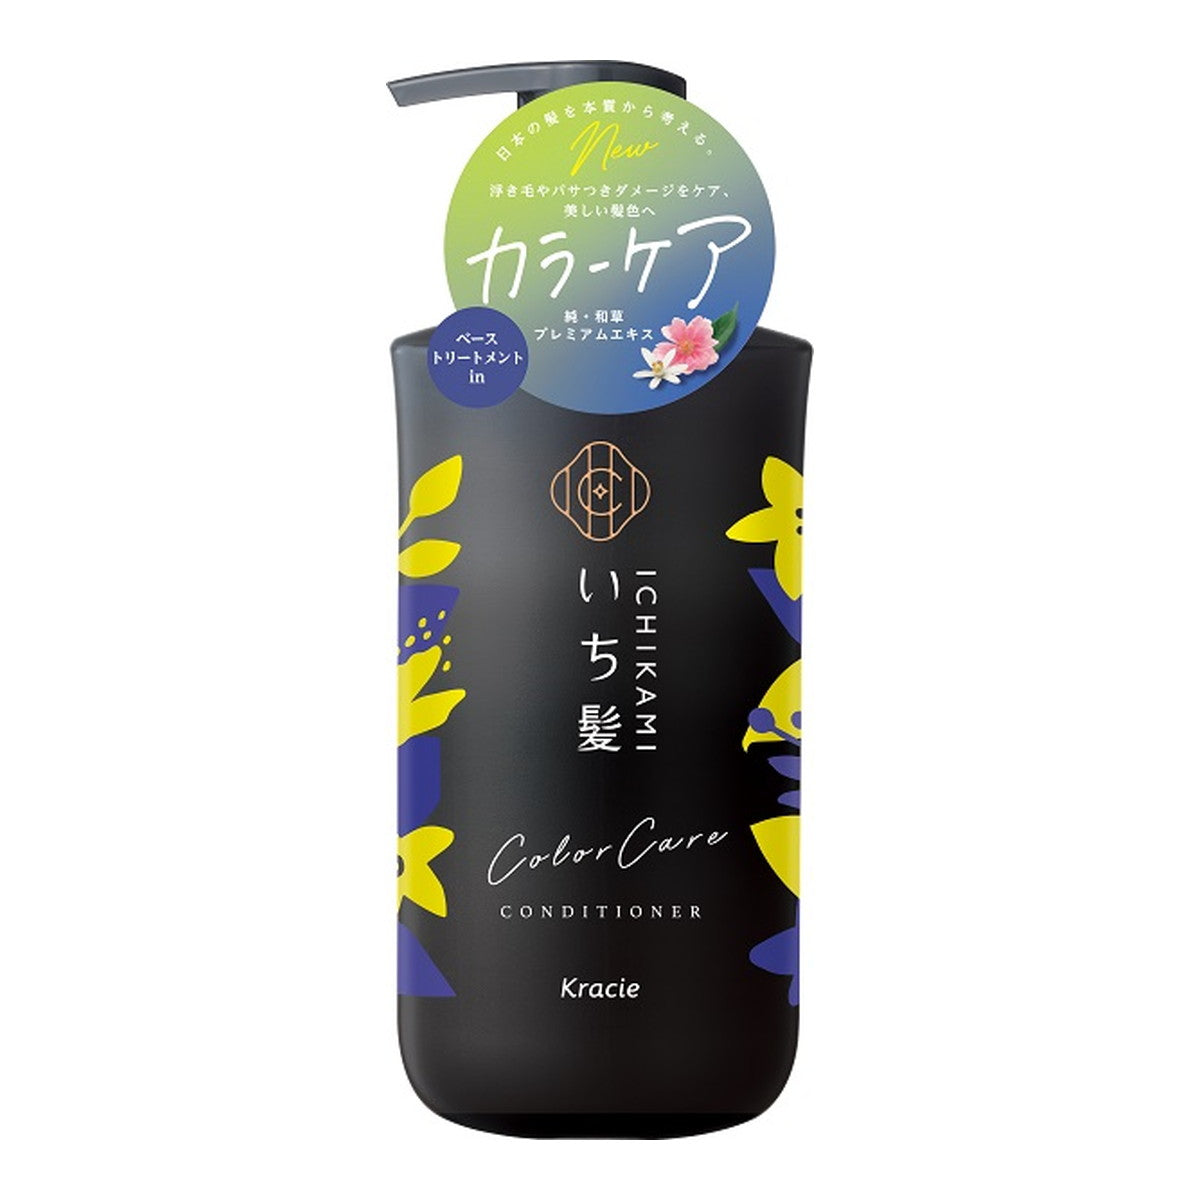 KRACIE Ichikami Color Care Shampoo and Conditioner Set 480ml+480g